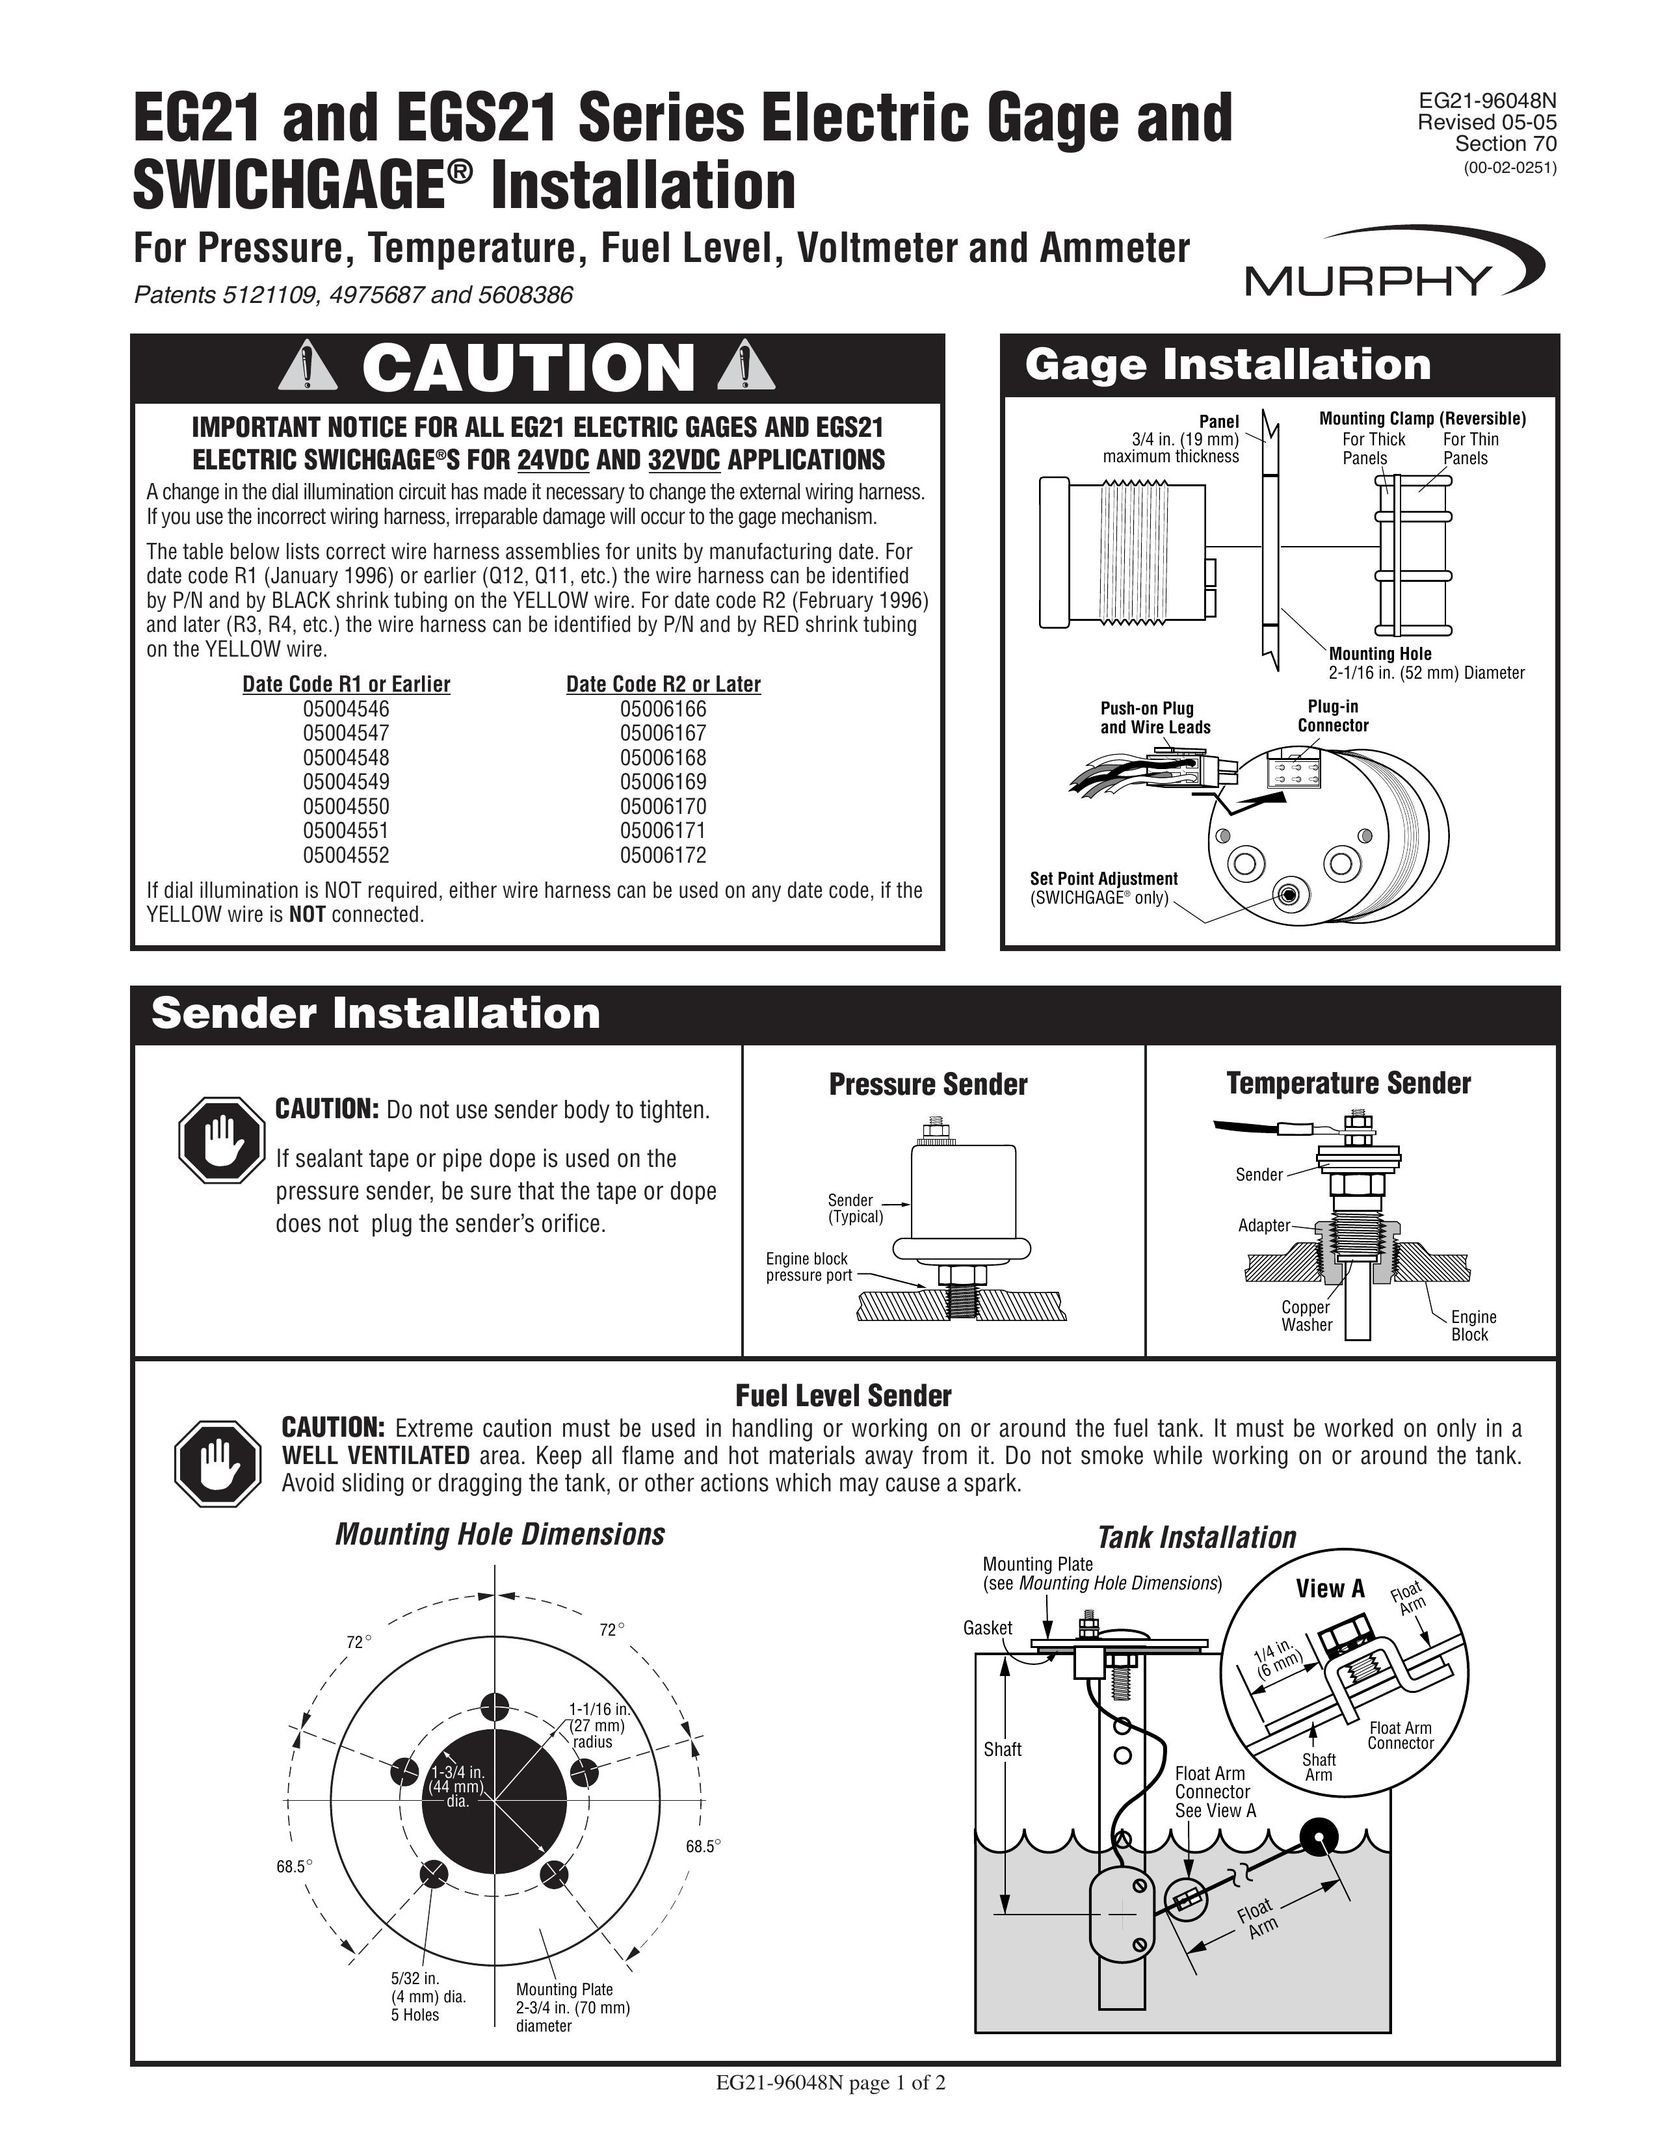 Murphy EGS21 Switch User Manual